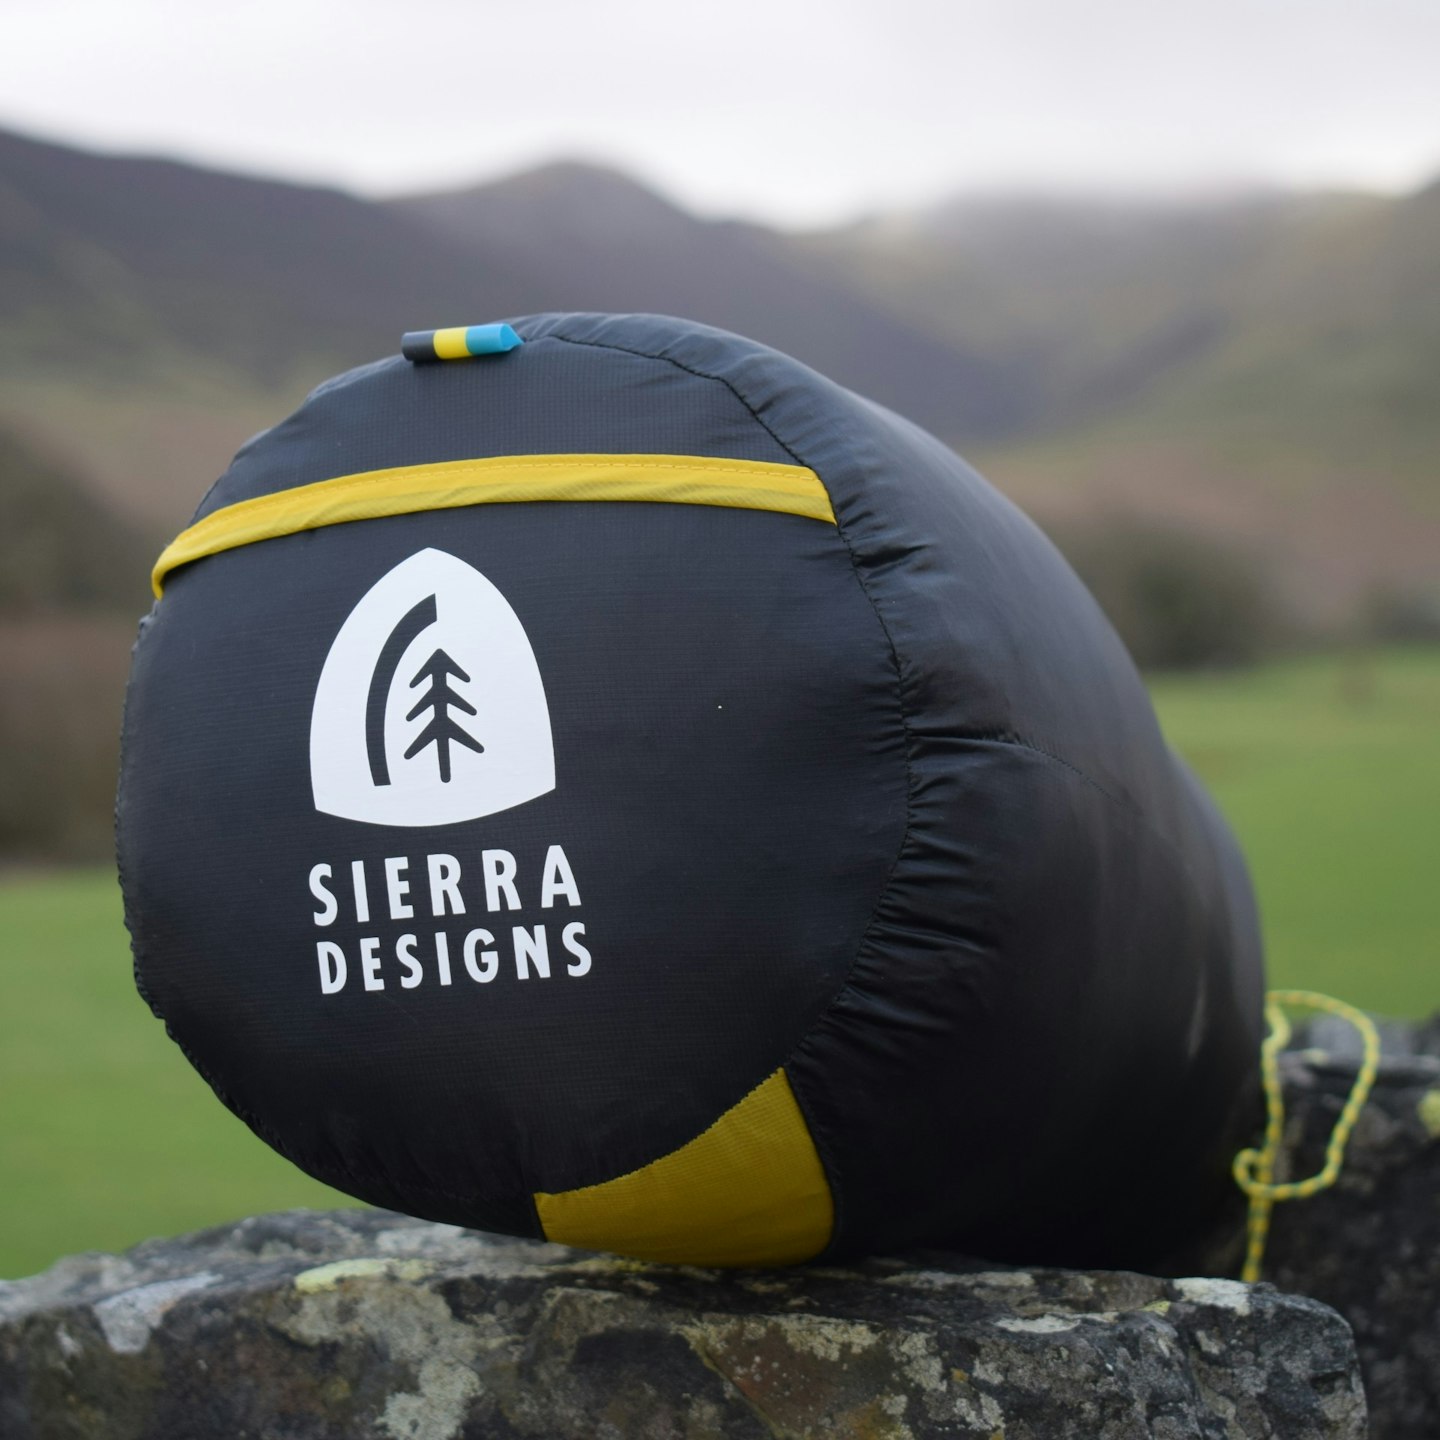 Sierra Designs Cloud 800 20°F in stuff sack